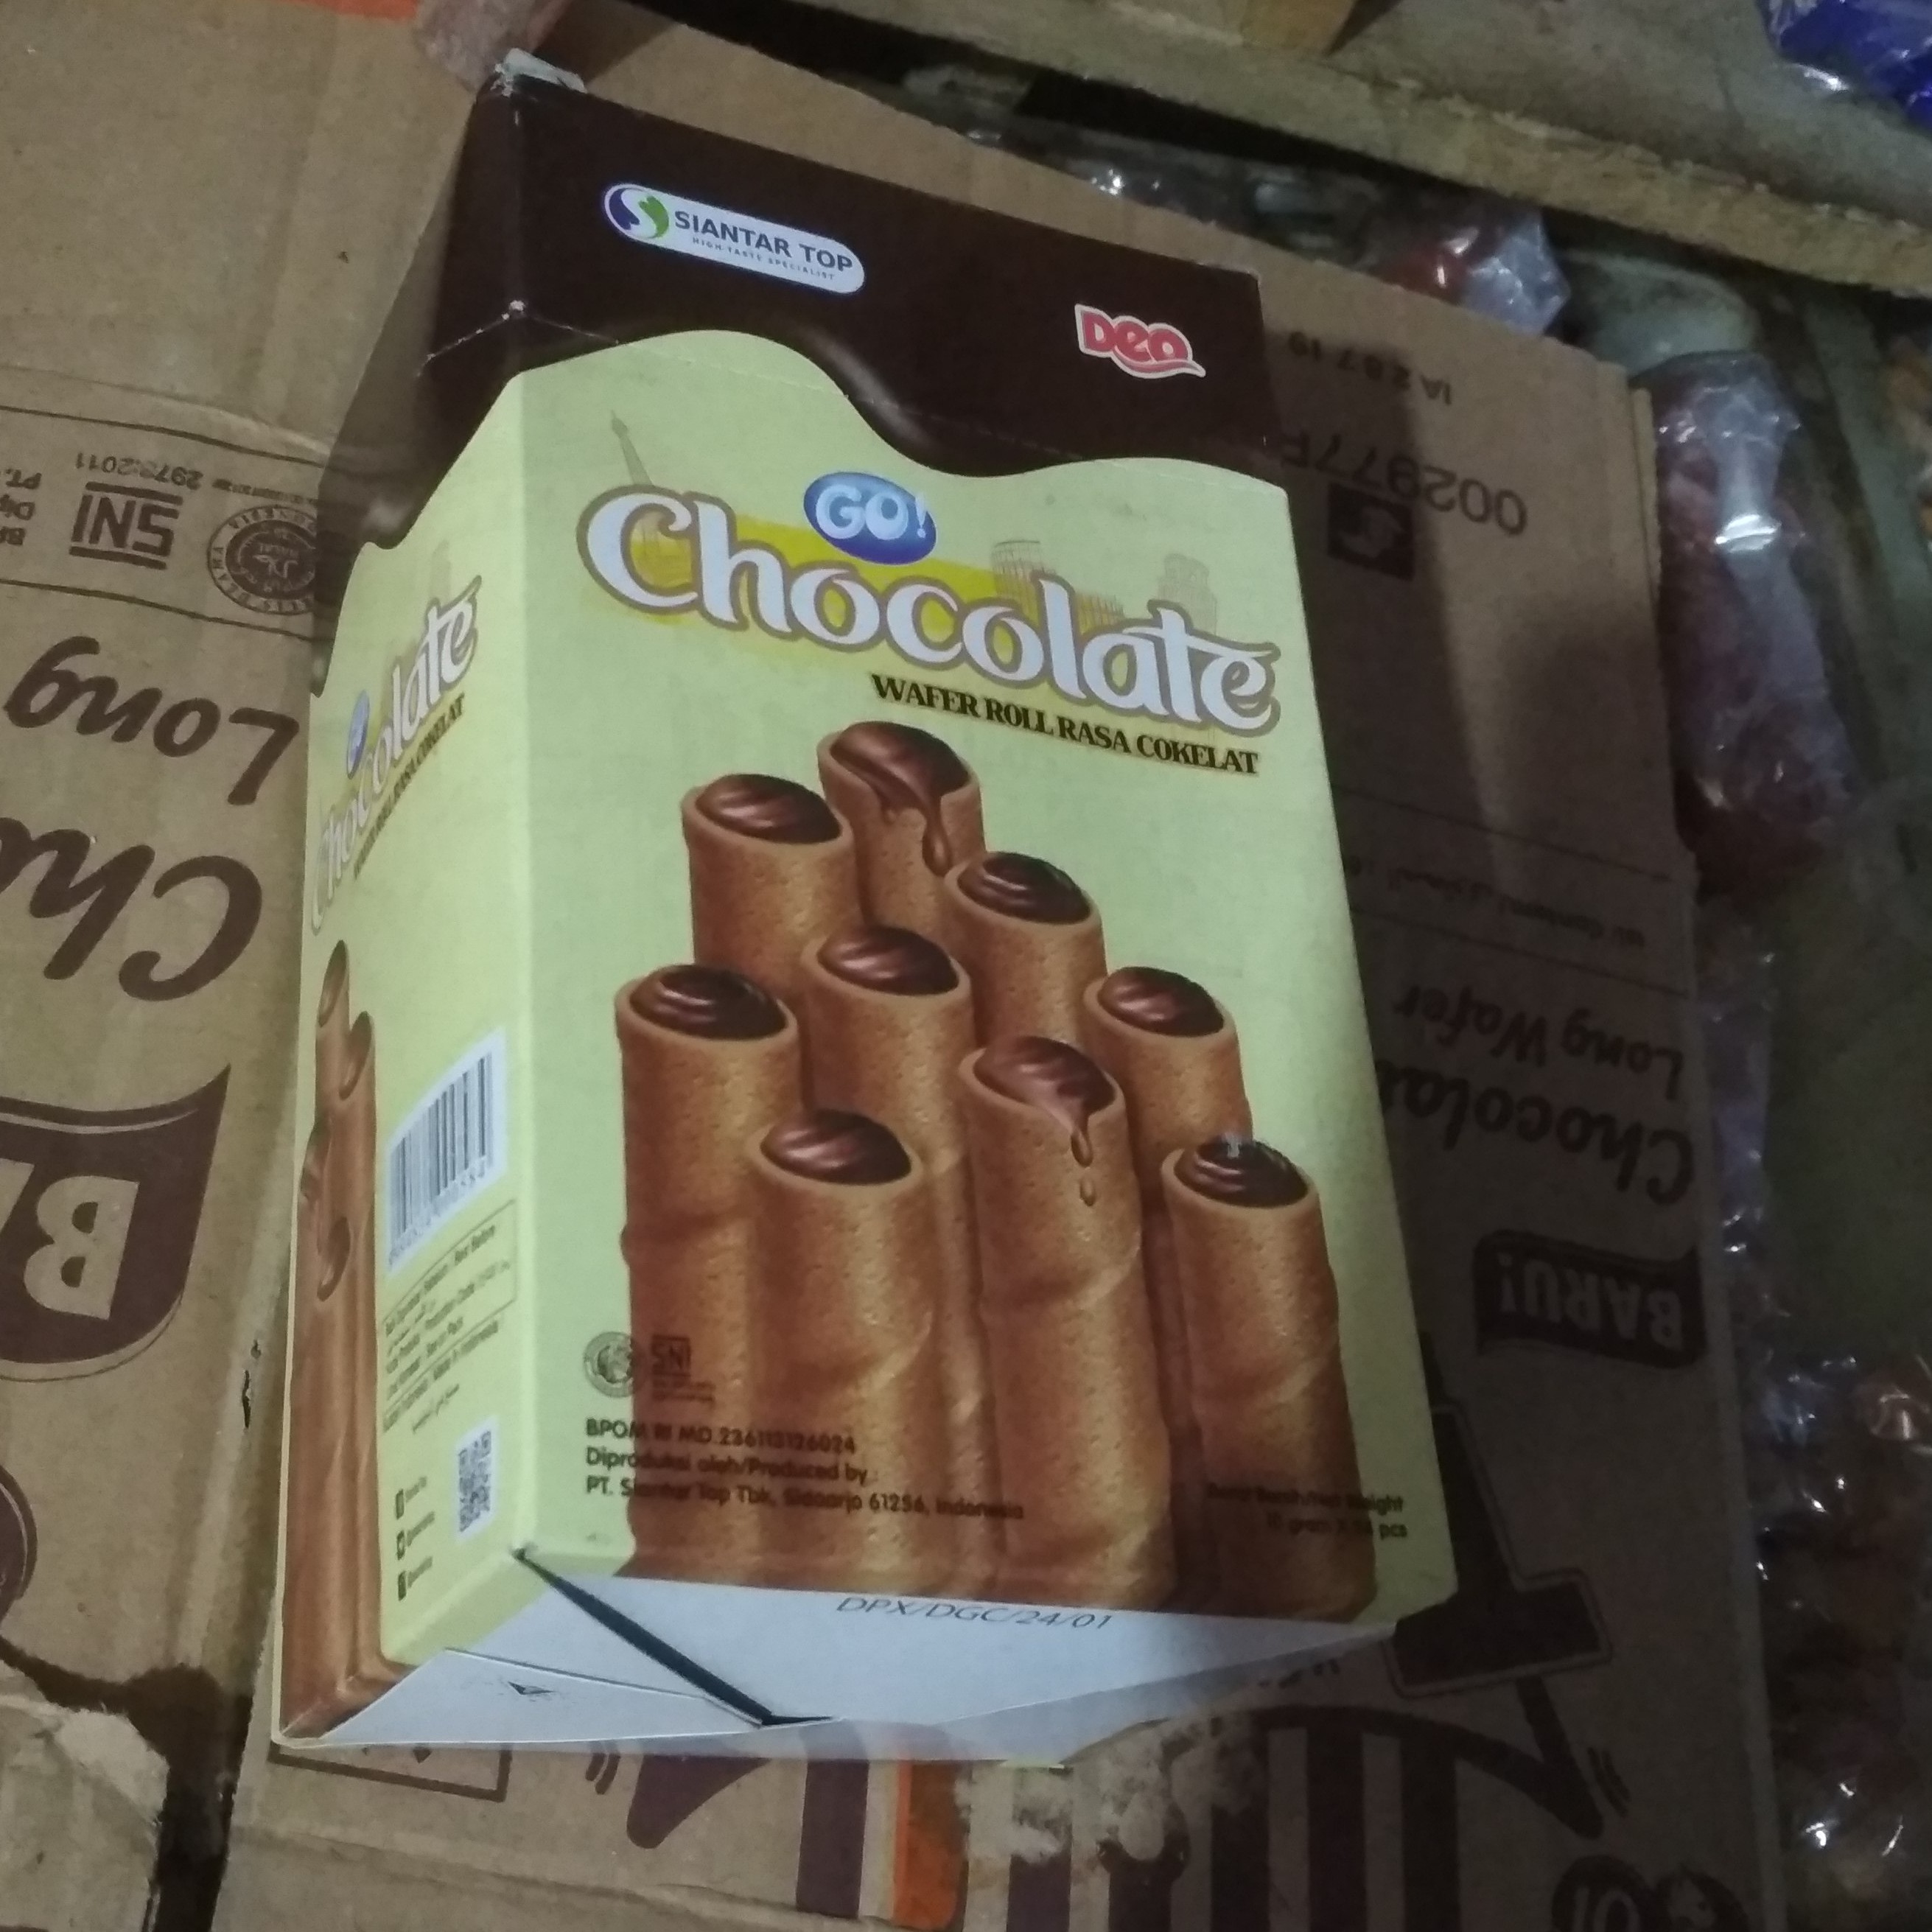 Go Chocolate